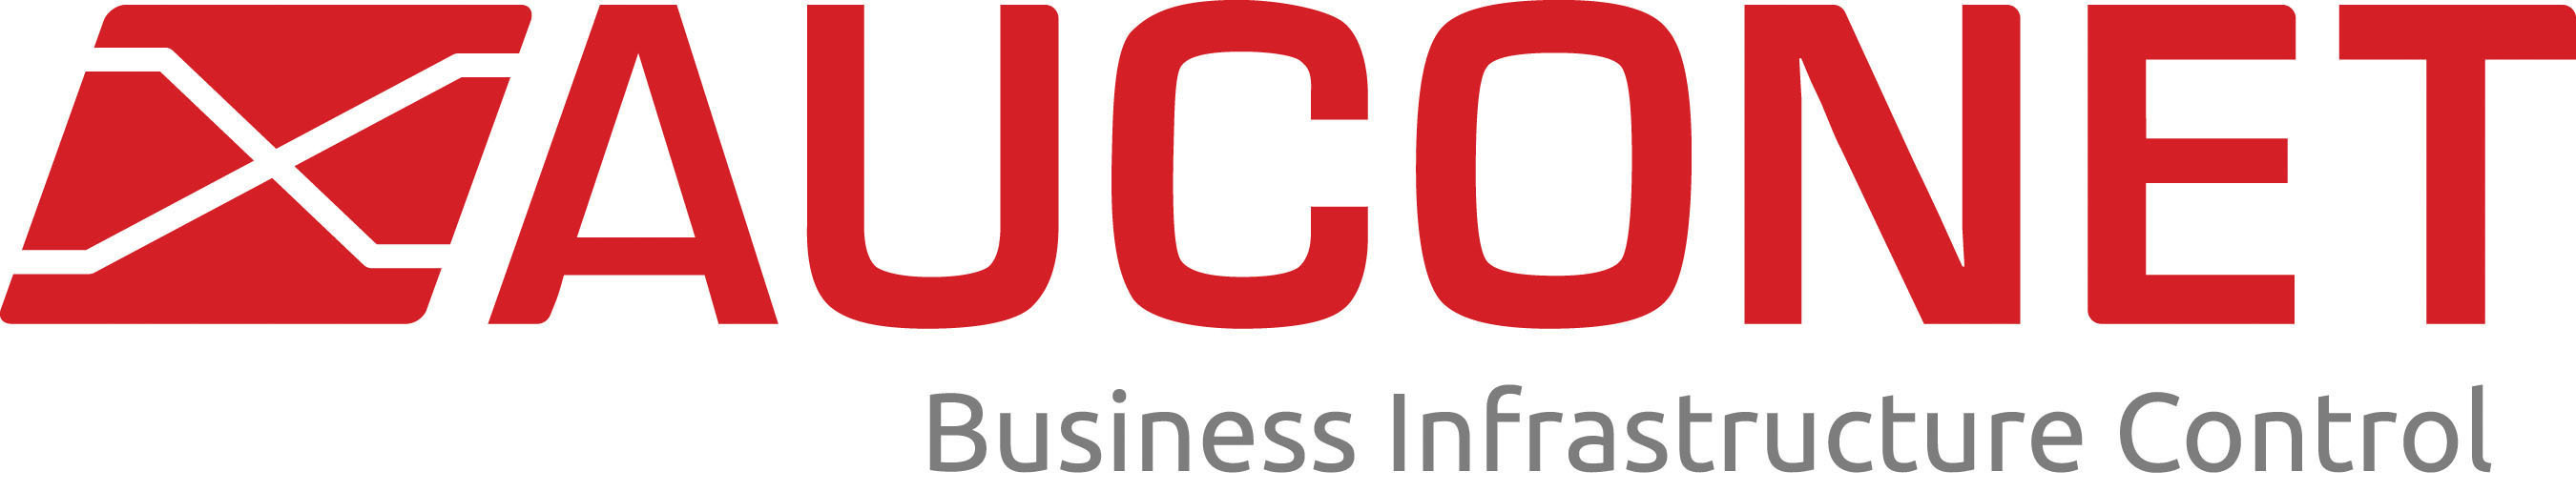 Auconet -- Next-Generation IT Operations Management delivering leading-edge, global-enterprise-grade Business Infrastructure Control Solution -- BICS.